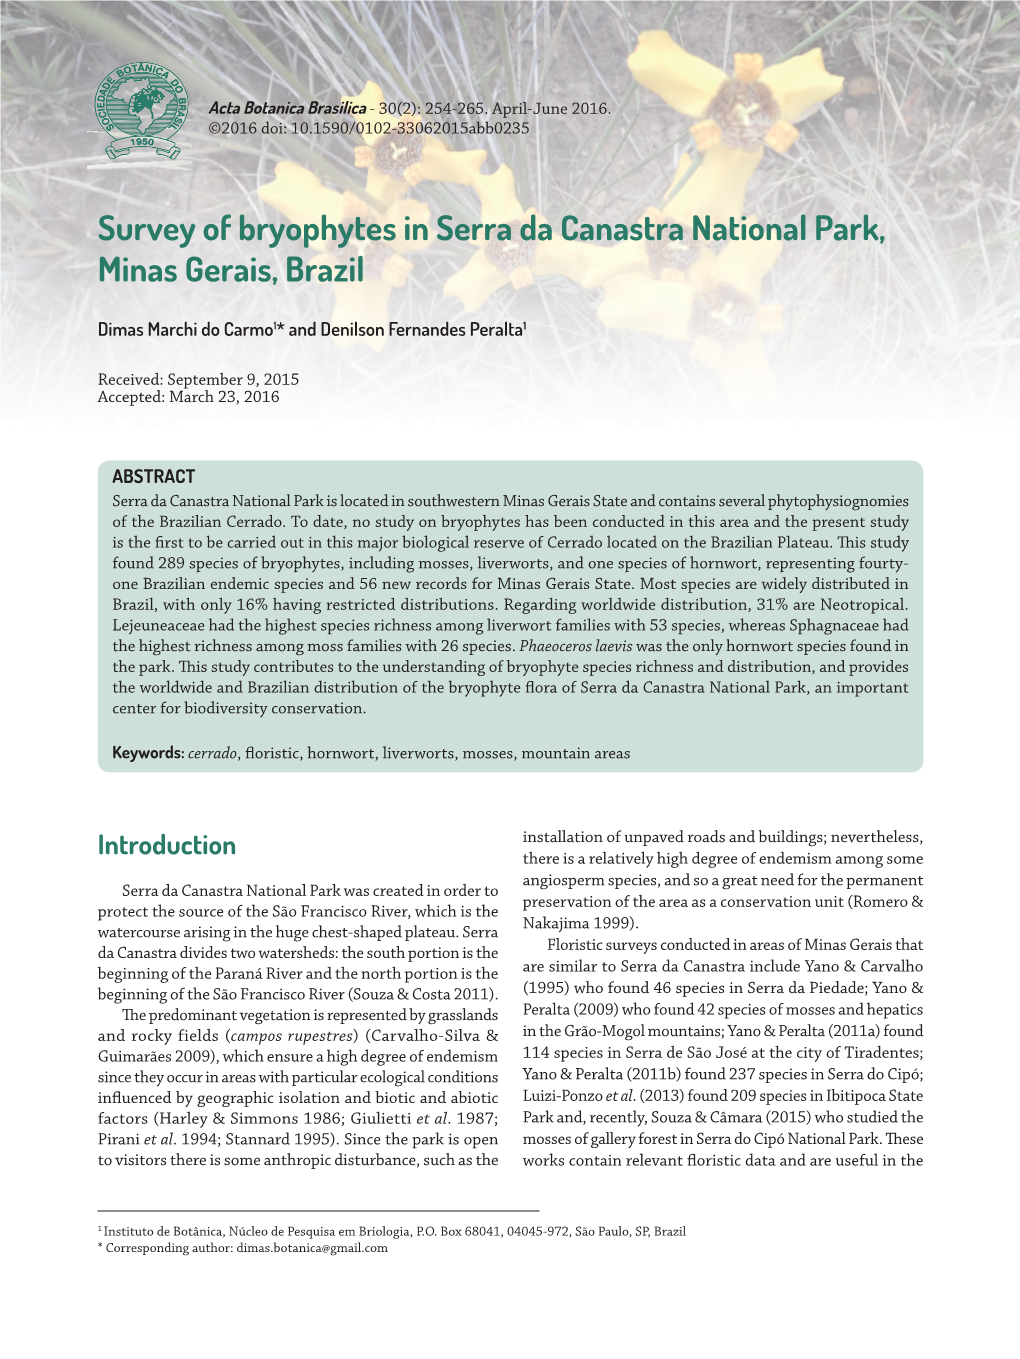 Survey of Bryophytes in Serra Da Canastra National Park, Minas Gerais, Brazil